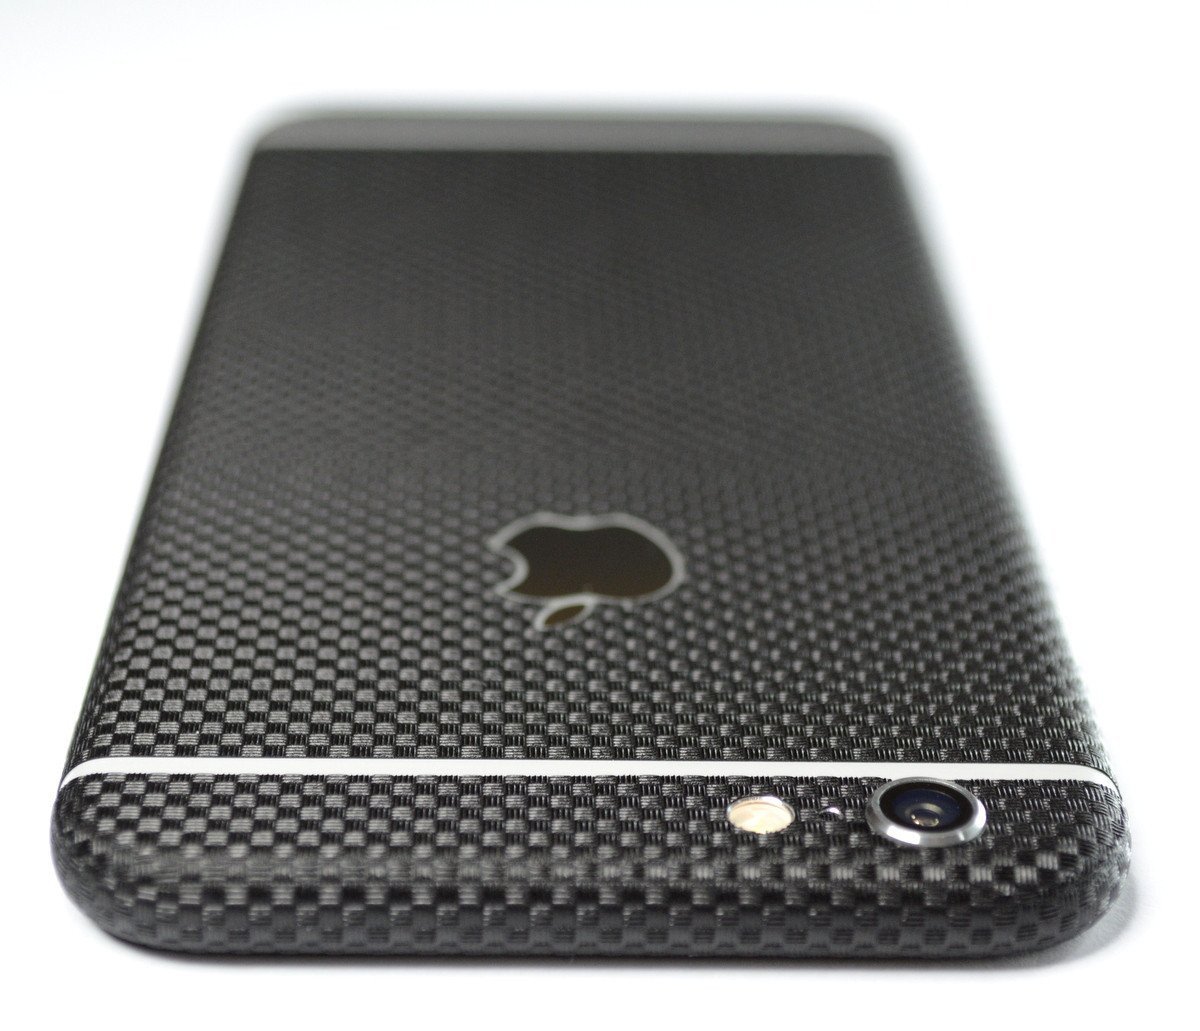 Iphone 6s Micro Black Carbon Fibre Skin Wrap Decal Easyskinz